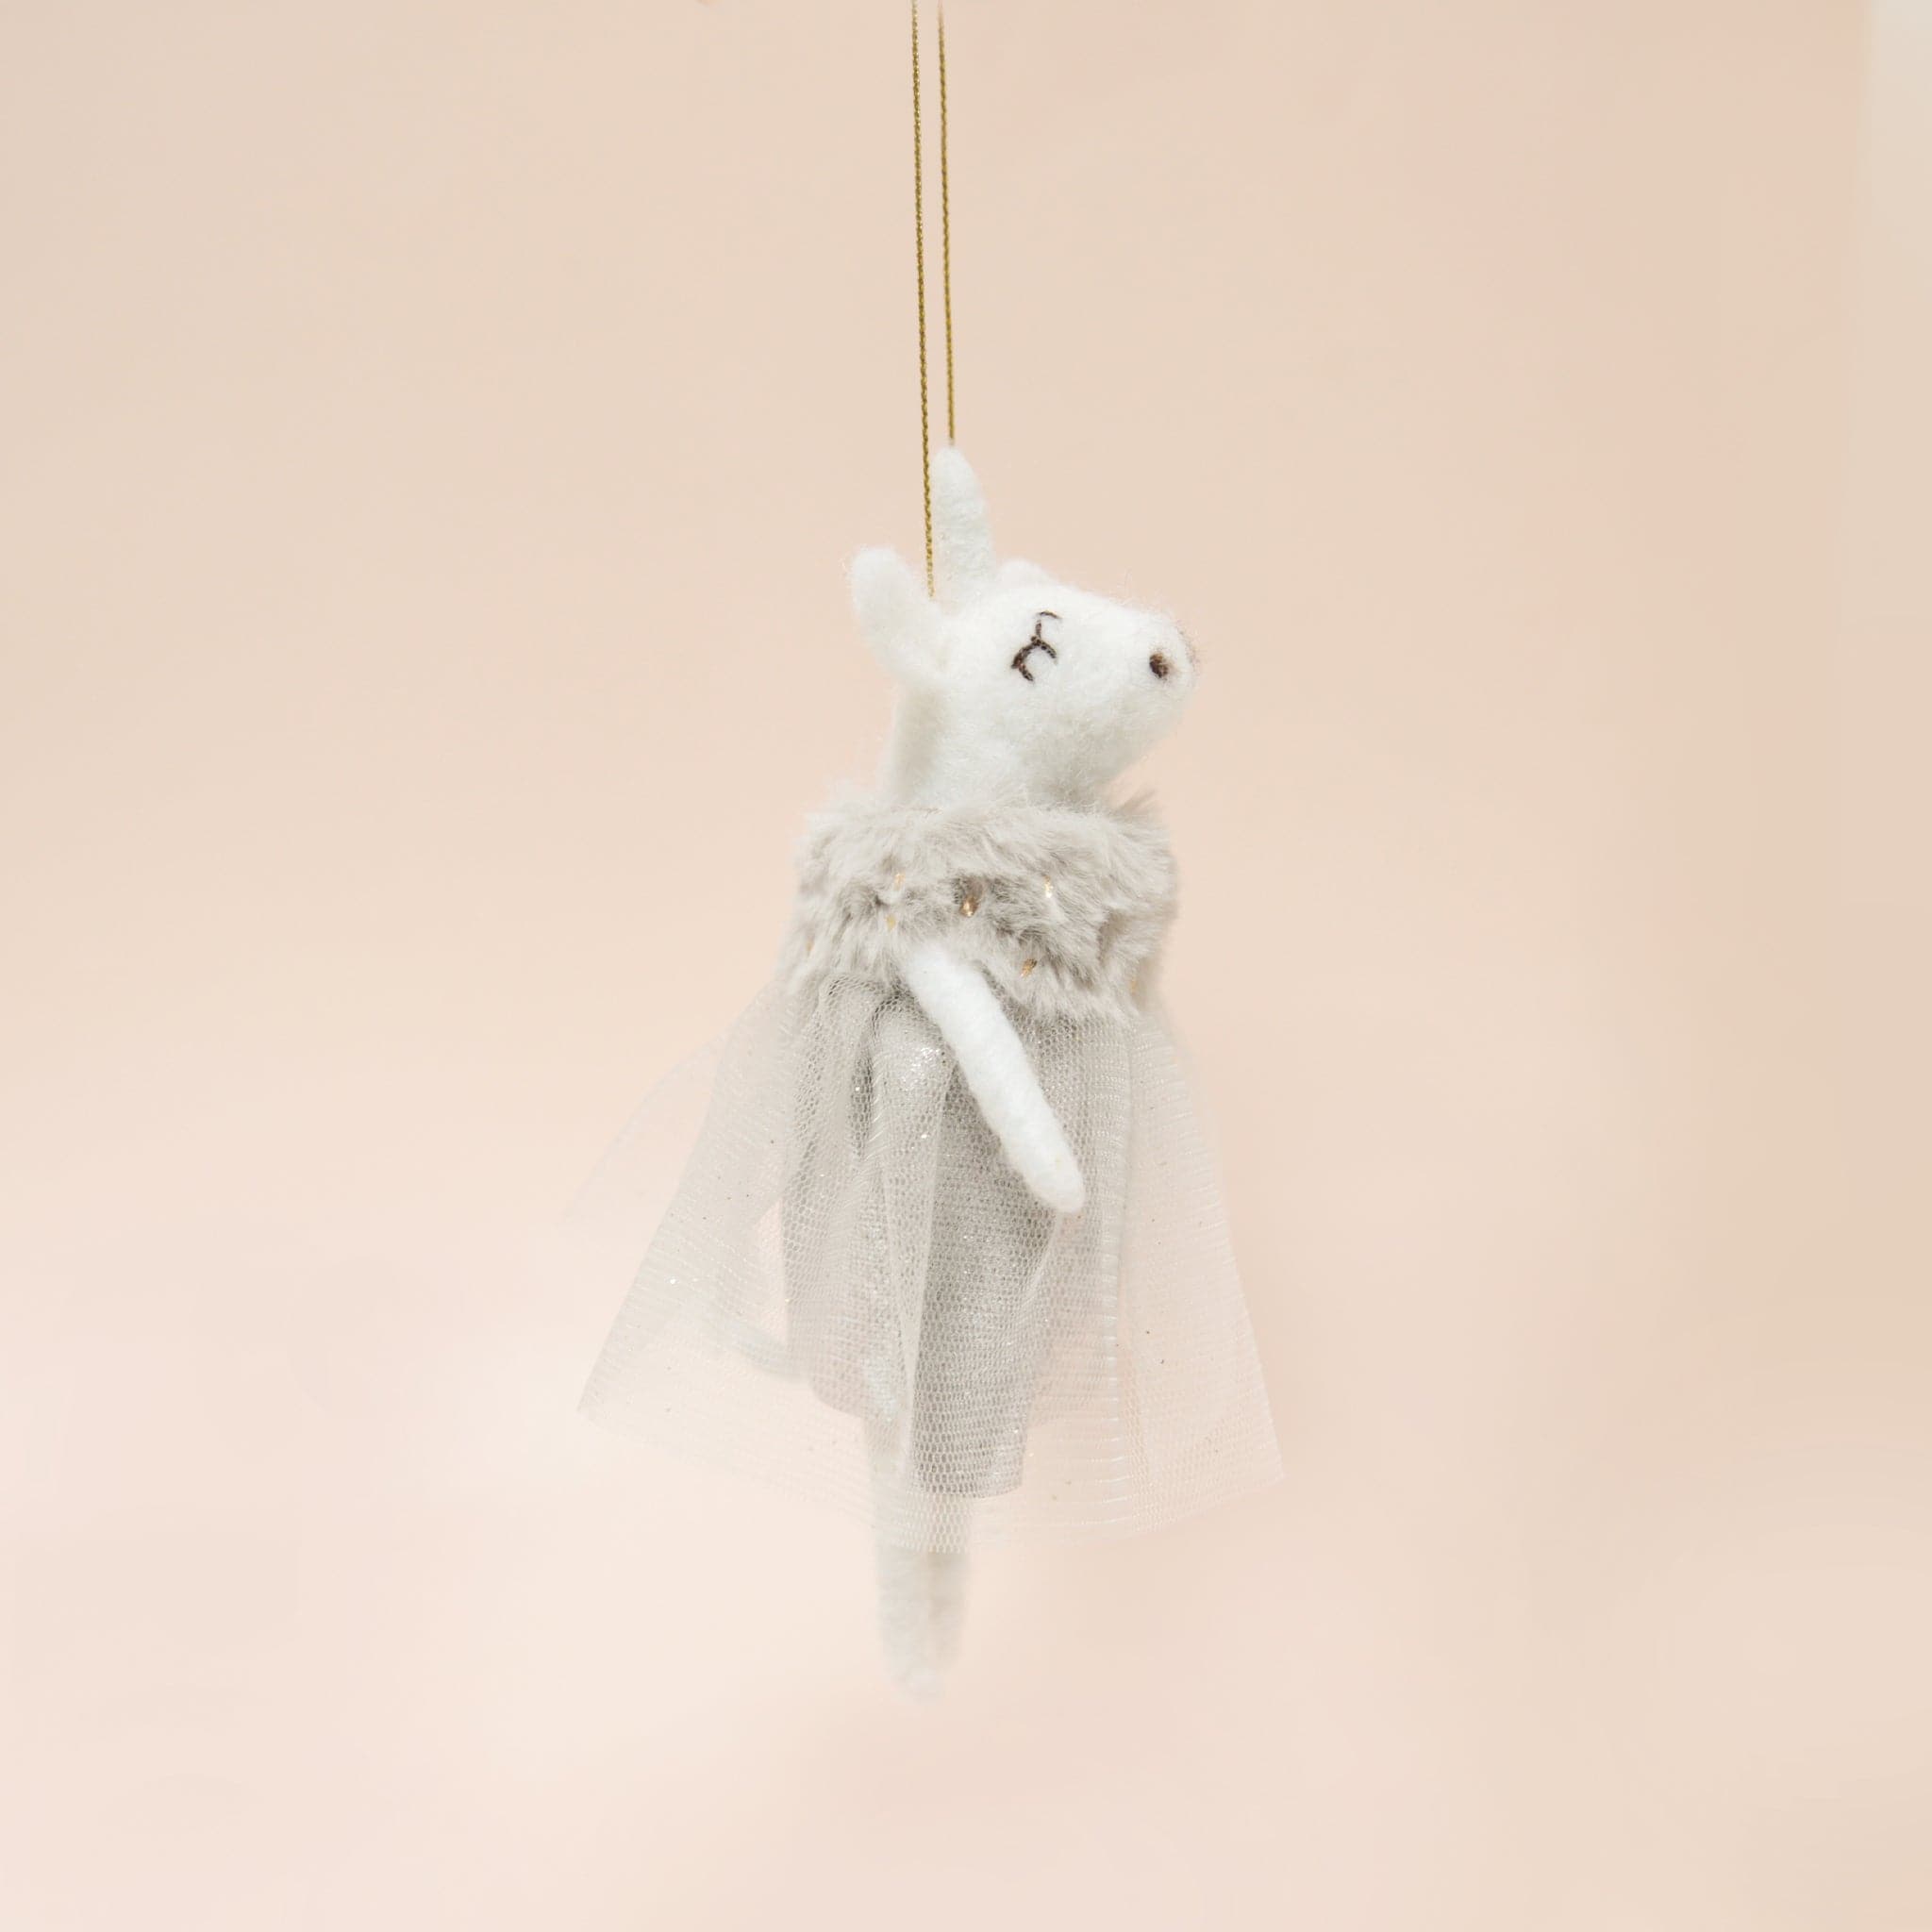 A white felt unicorn ornament with a grey tulle dress.